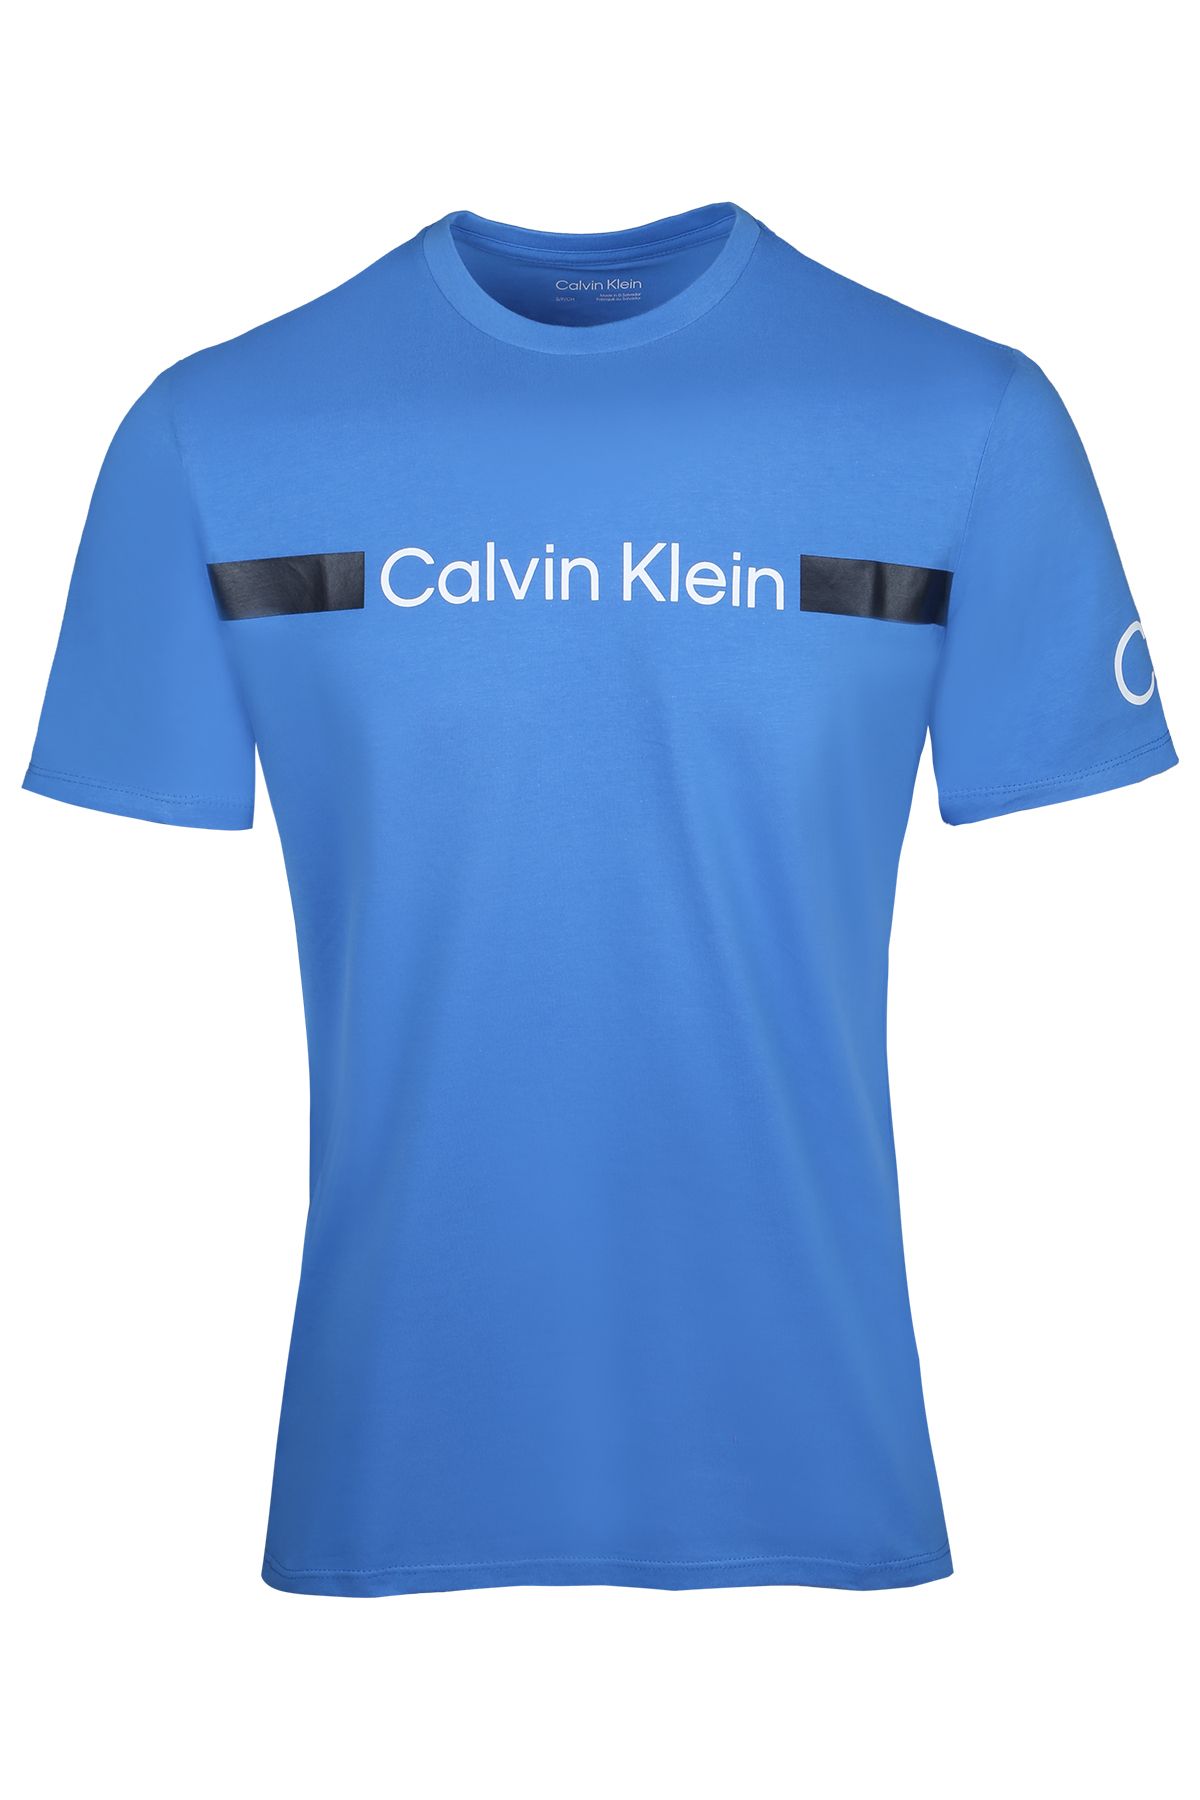 Calvin Klein Erkek T-shırt 40ıc861-400